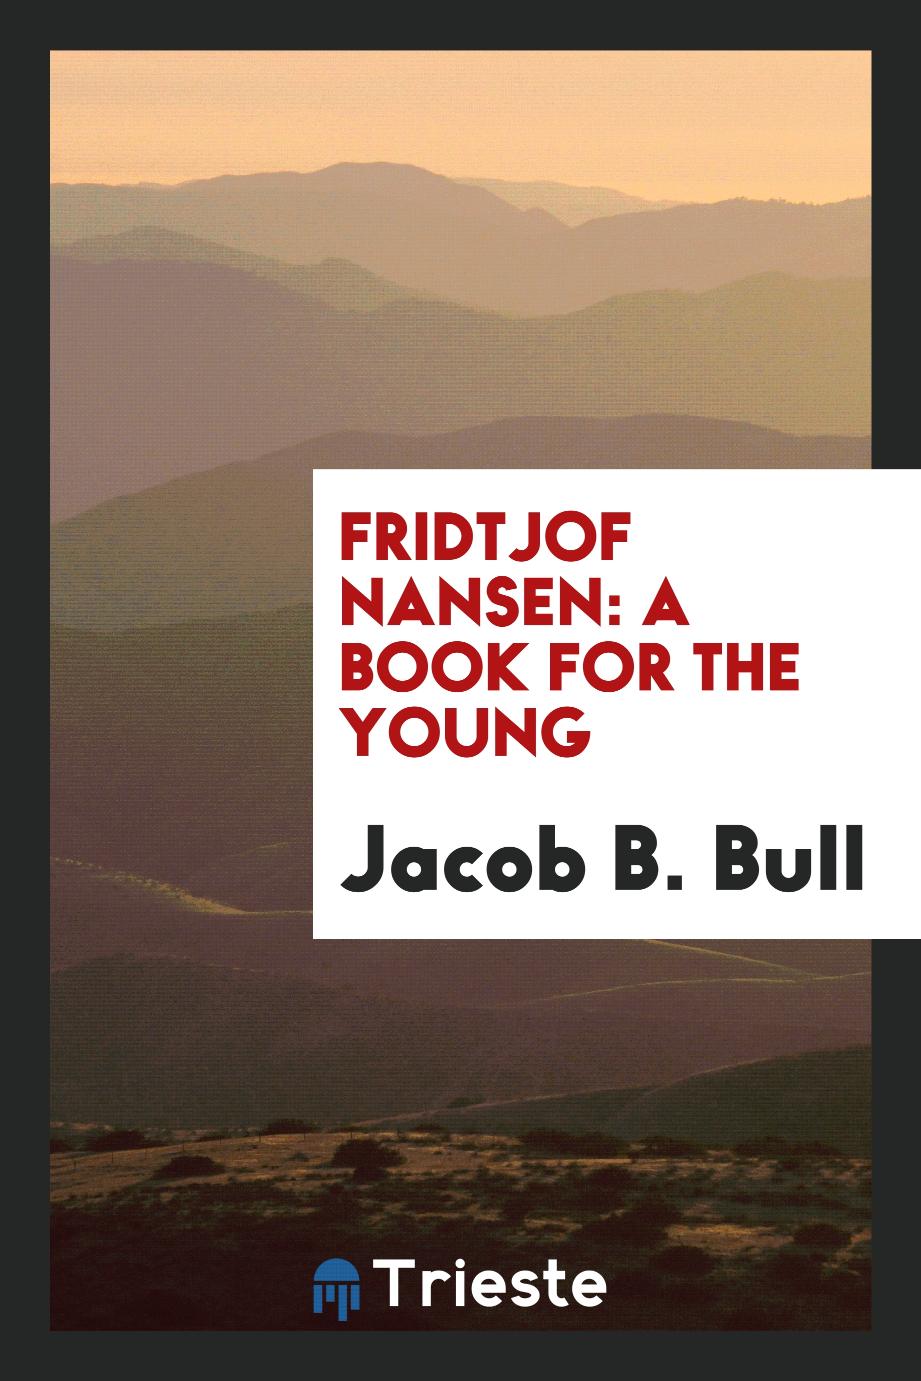 Fridtjof Nansen: A Book for the Young